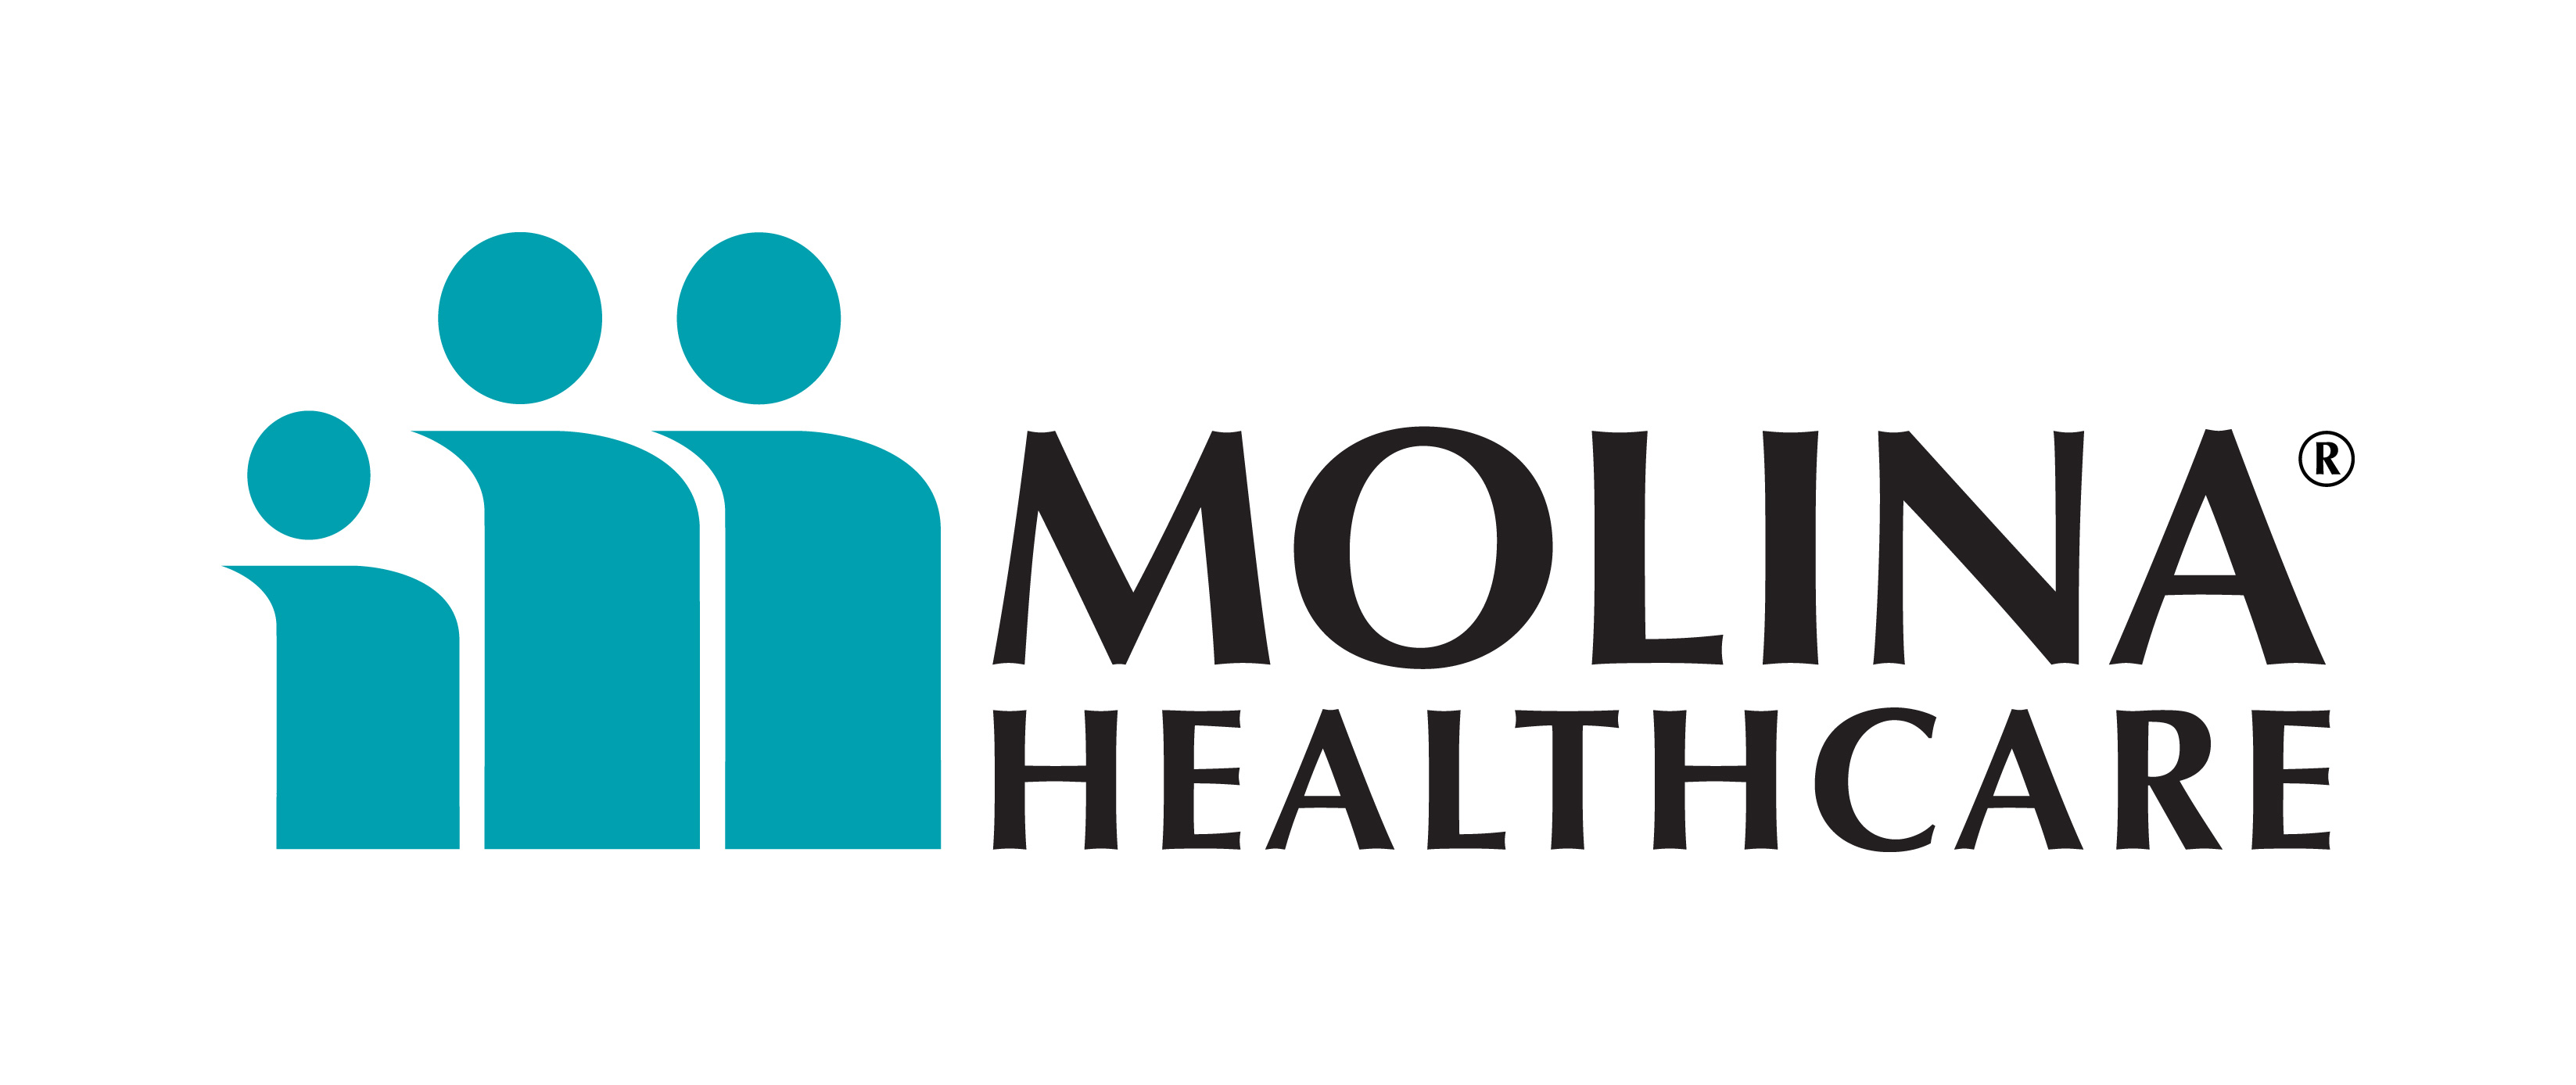 FileMolina Healthcare Logo.jpg